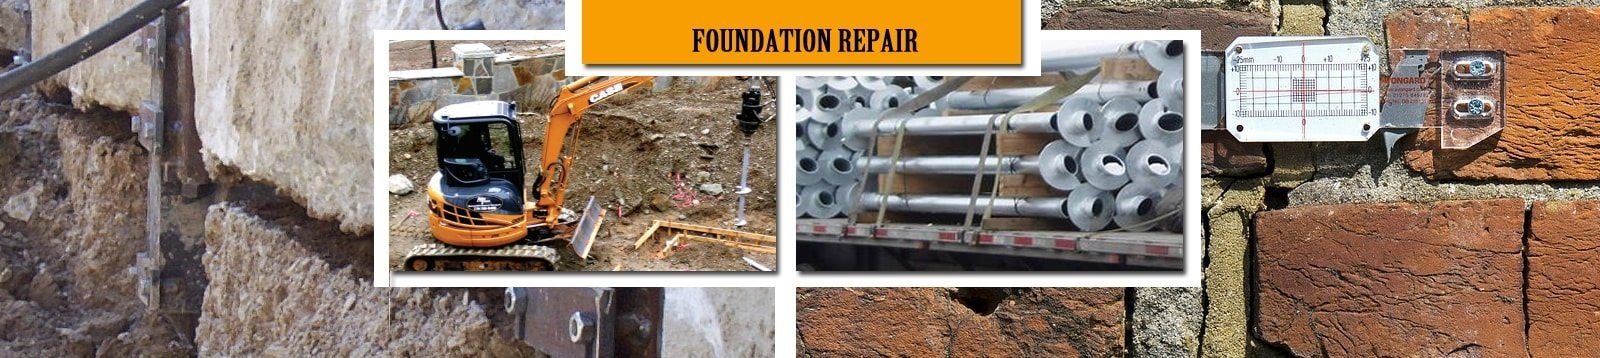 foundation repair services in Eastern Nebraska and Western Iowa